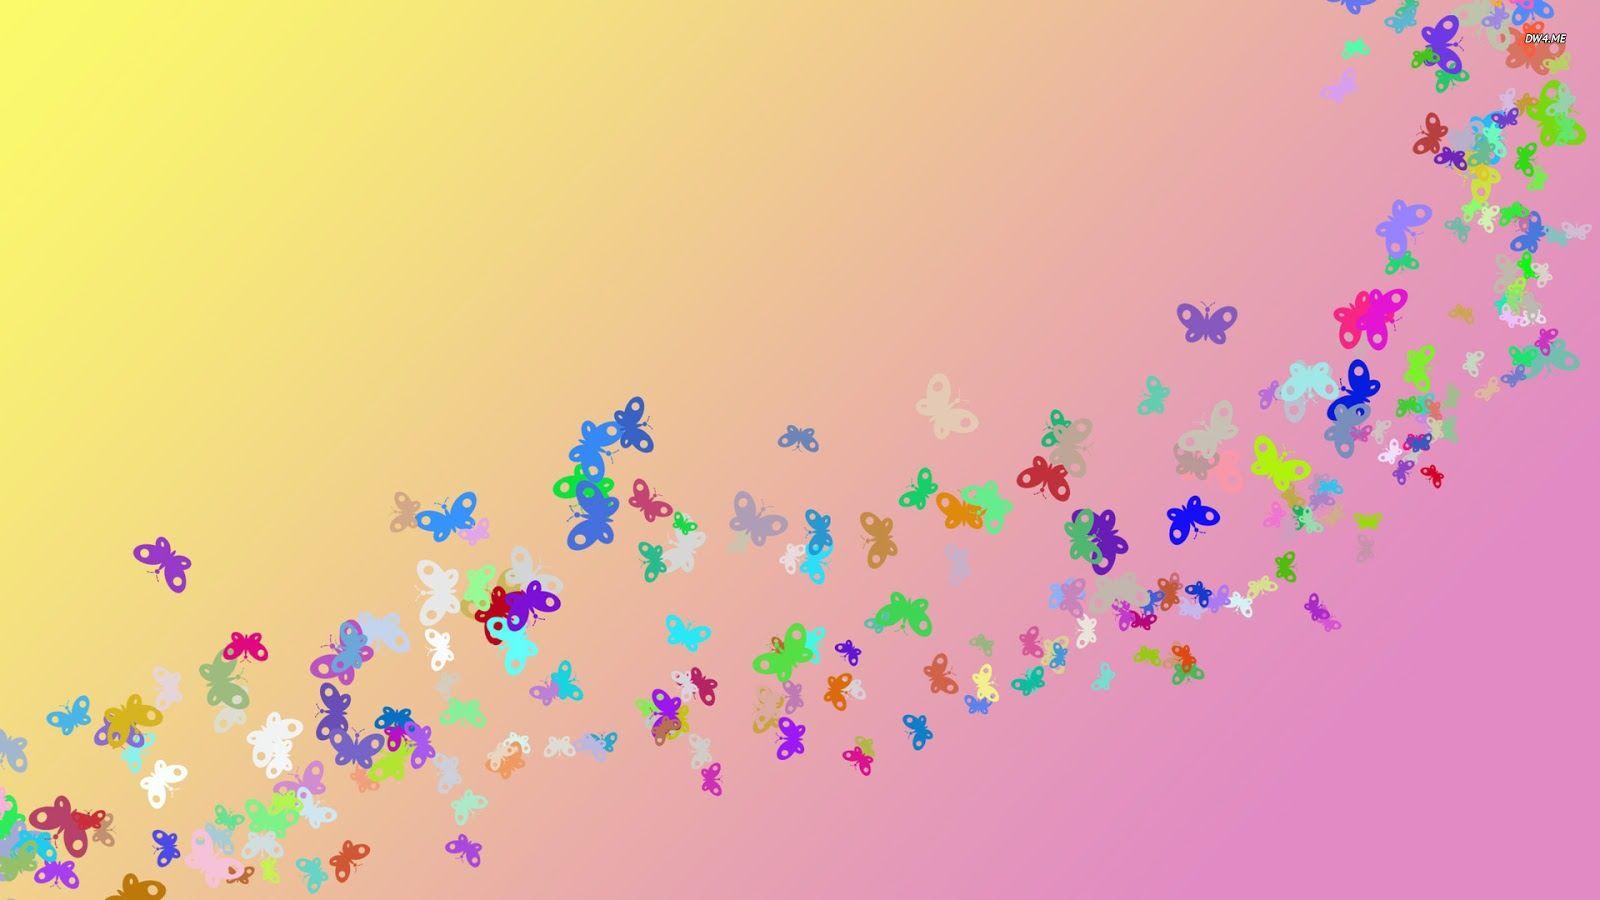 ImagesList.com: Wallpaper with Butterflies 5